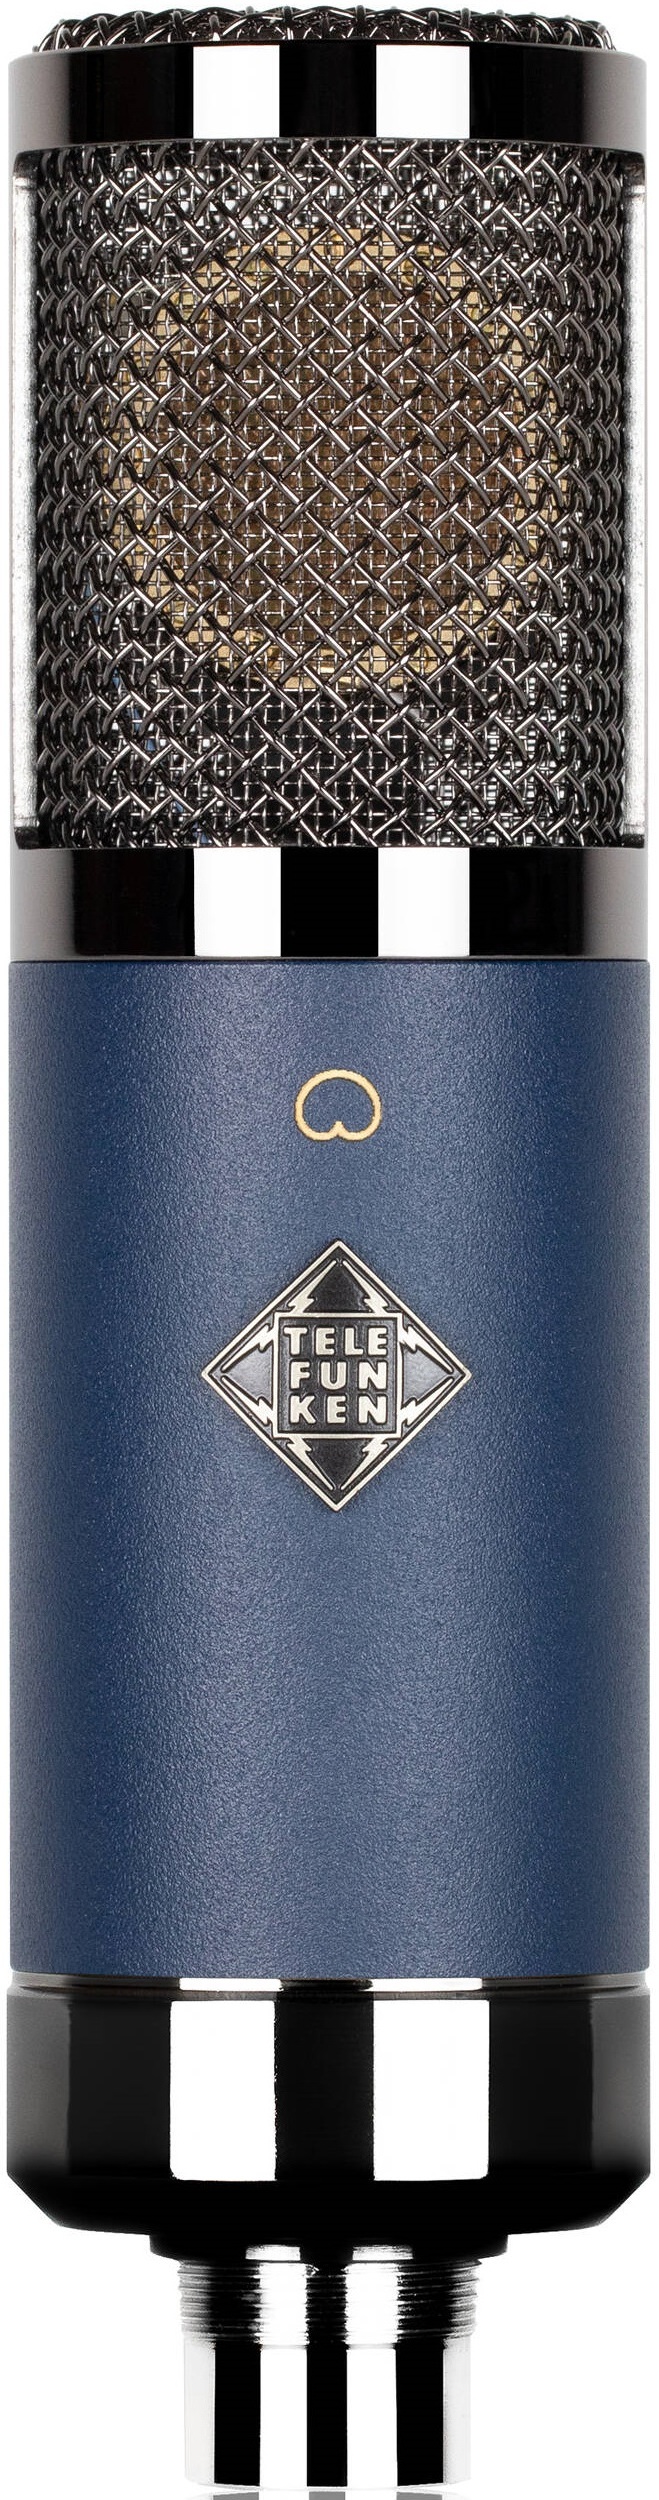 Telefunken Tf11 Fet - Micro Statique Large Membrane - Main picture